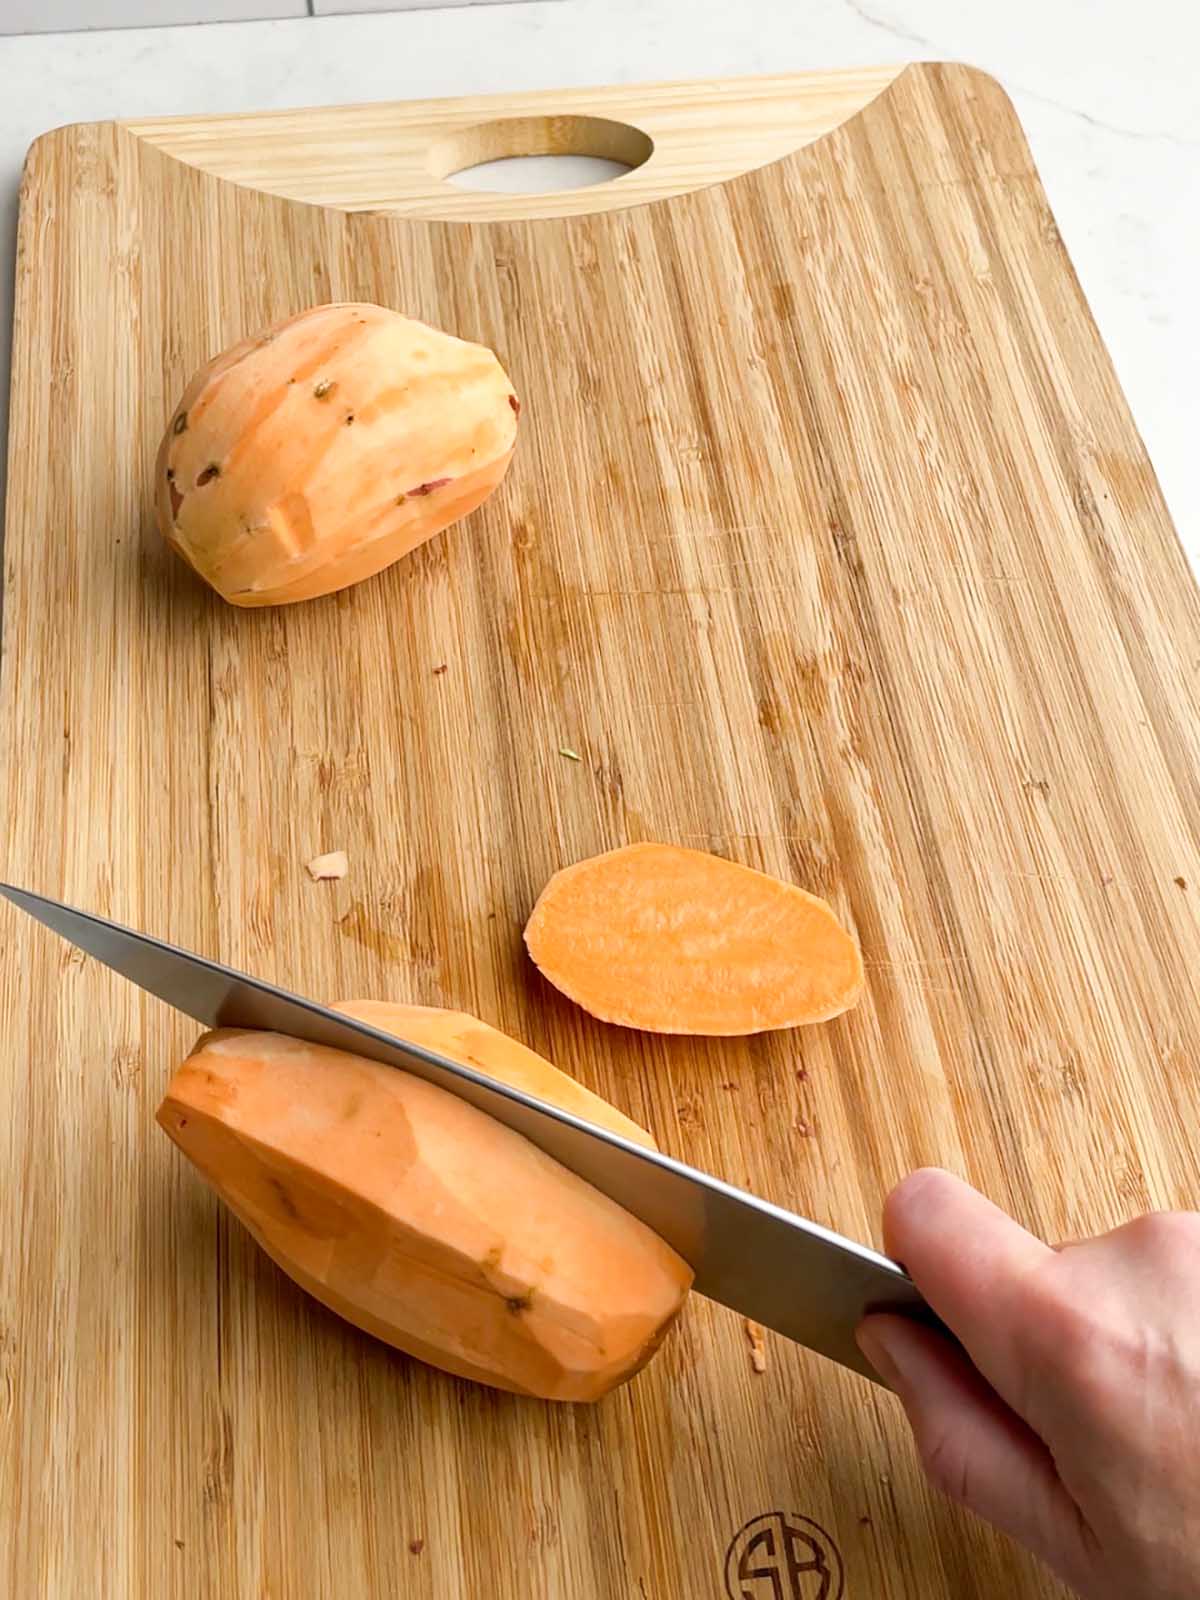 knife cutting into a sweet potato